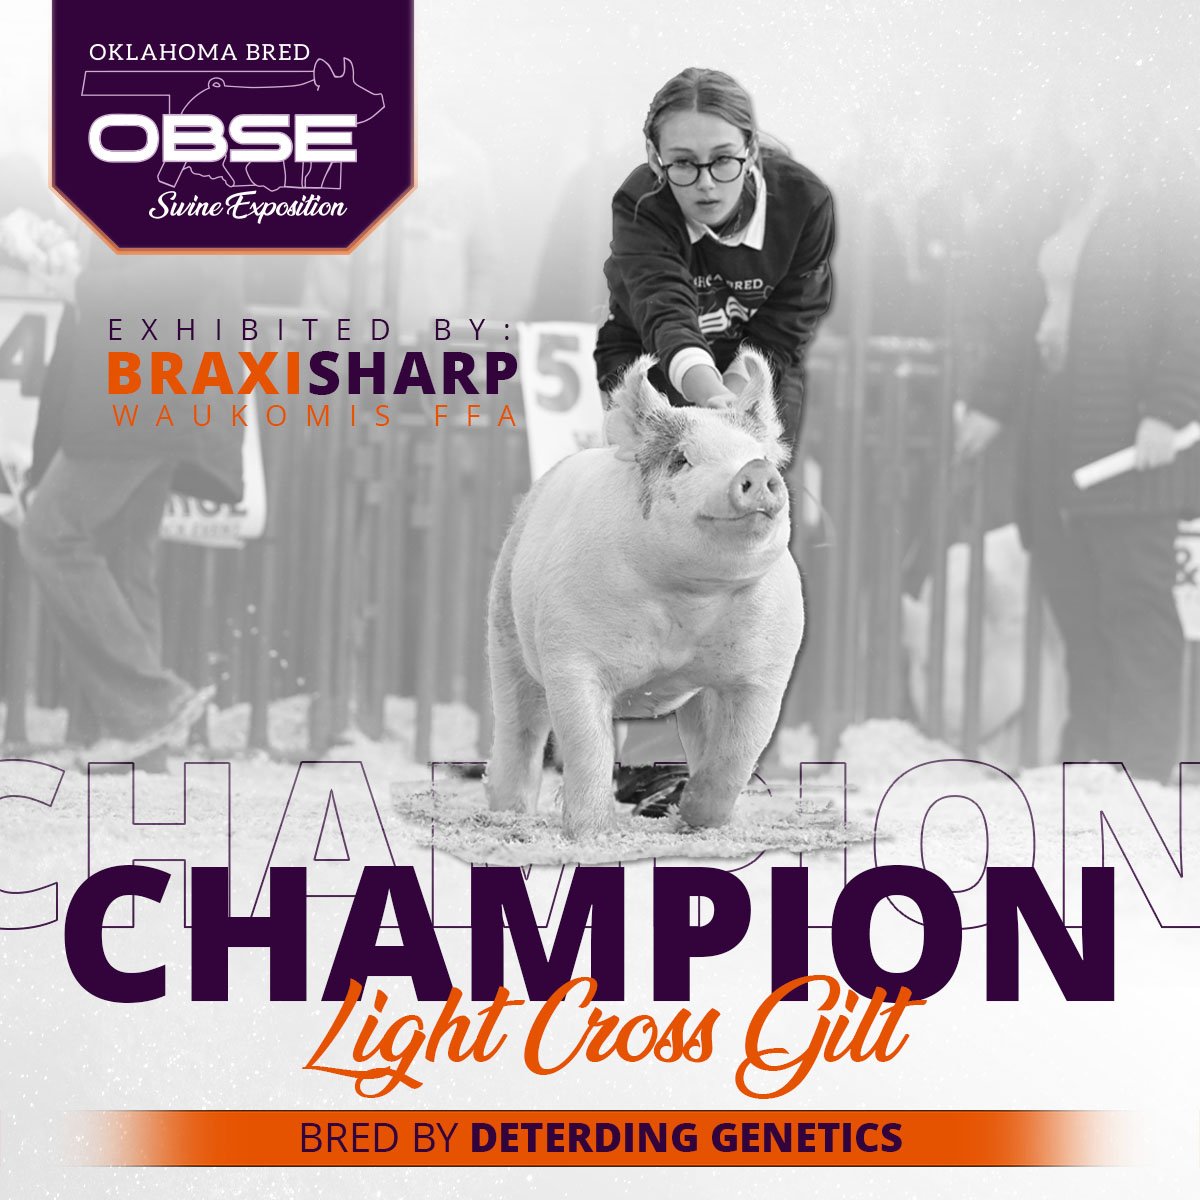 OBSE23_ChampionLightCross.jpg